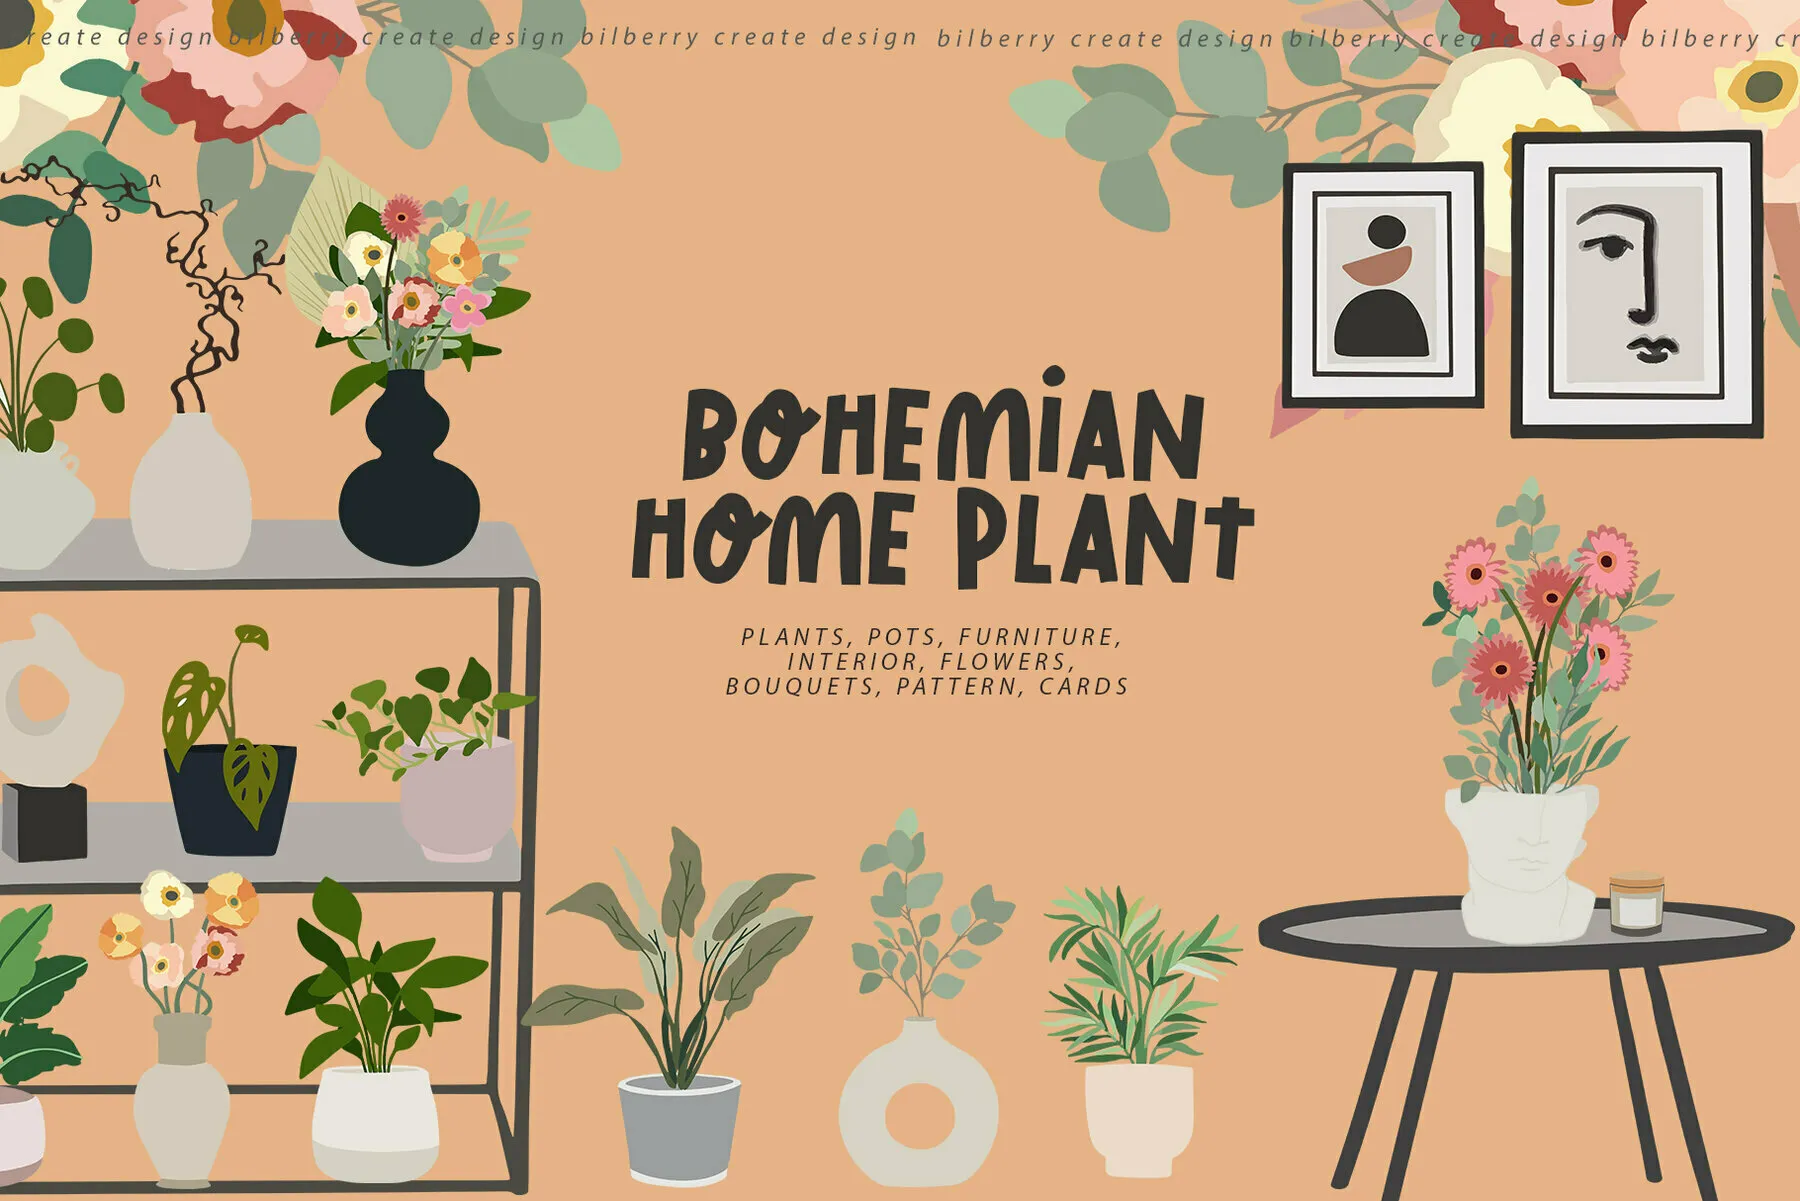 BOHEMIAN HOME PLANT